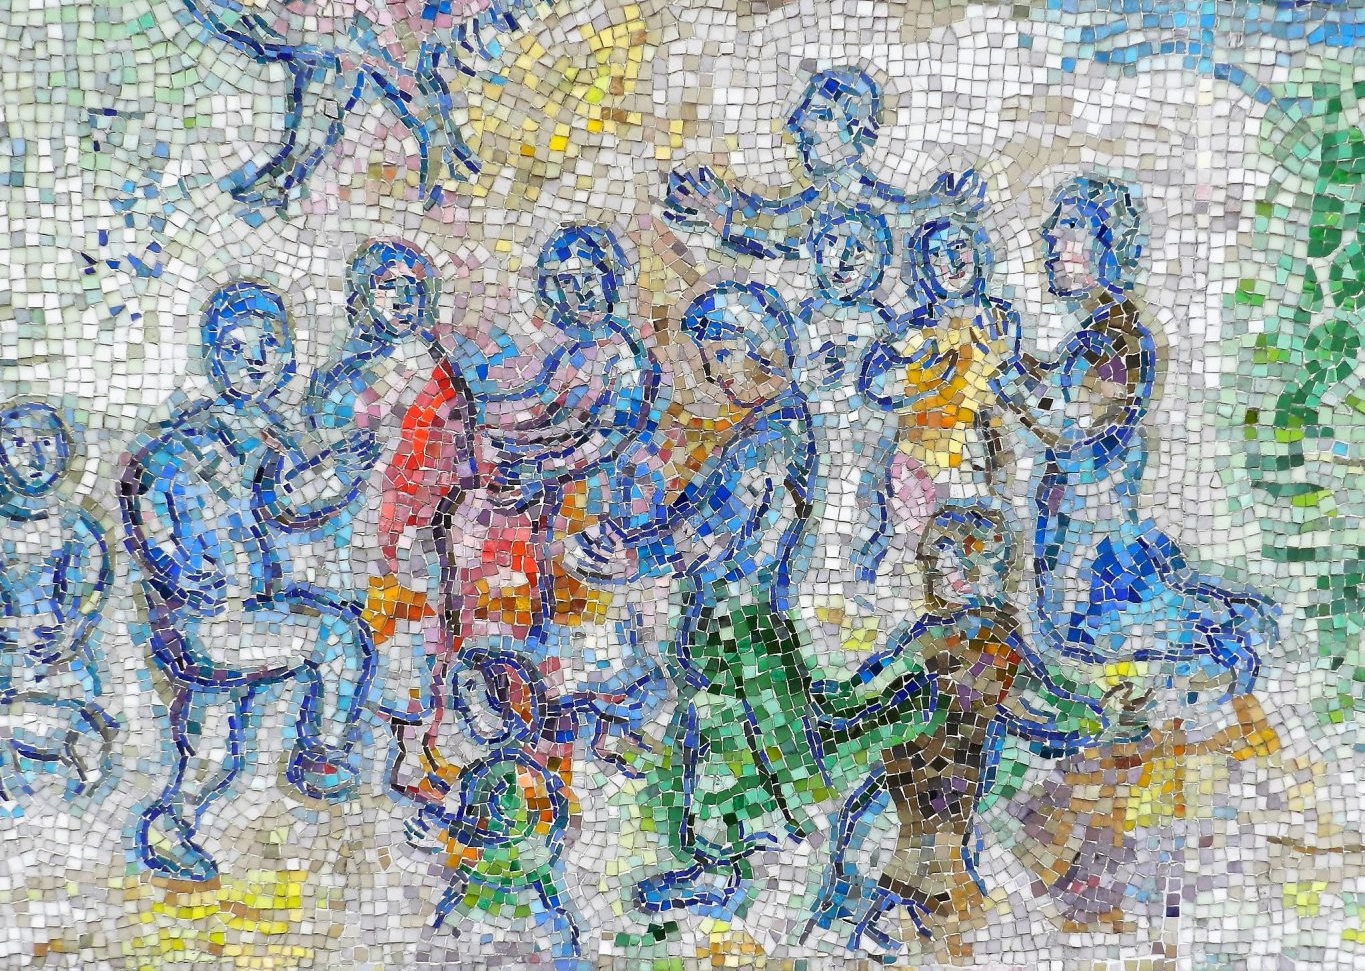 Marc+Chagall-1887-1985 (28).jpg